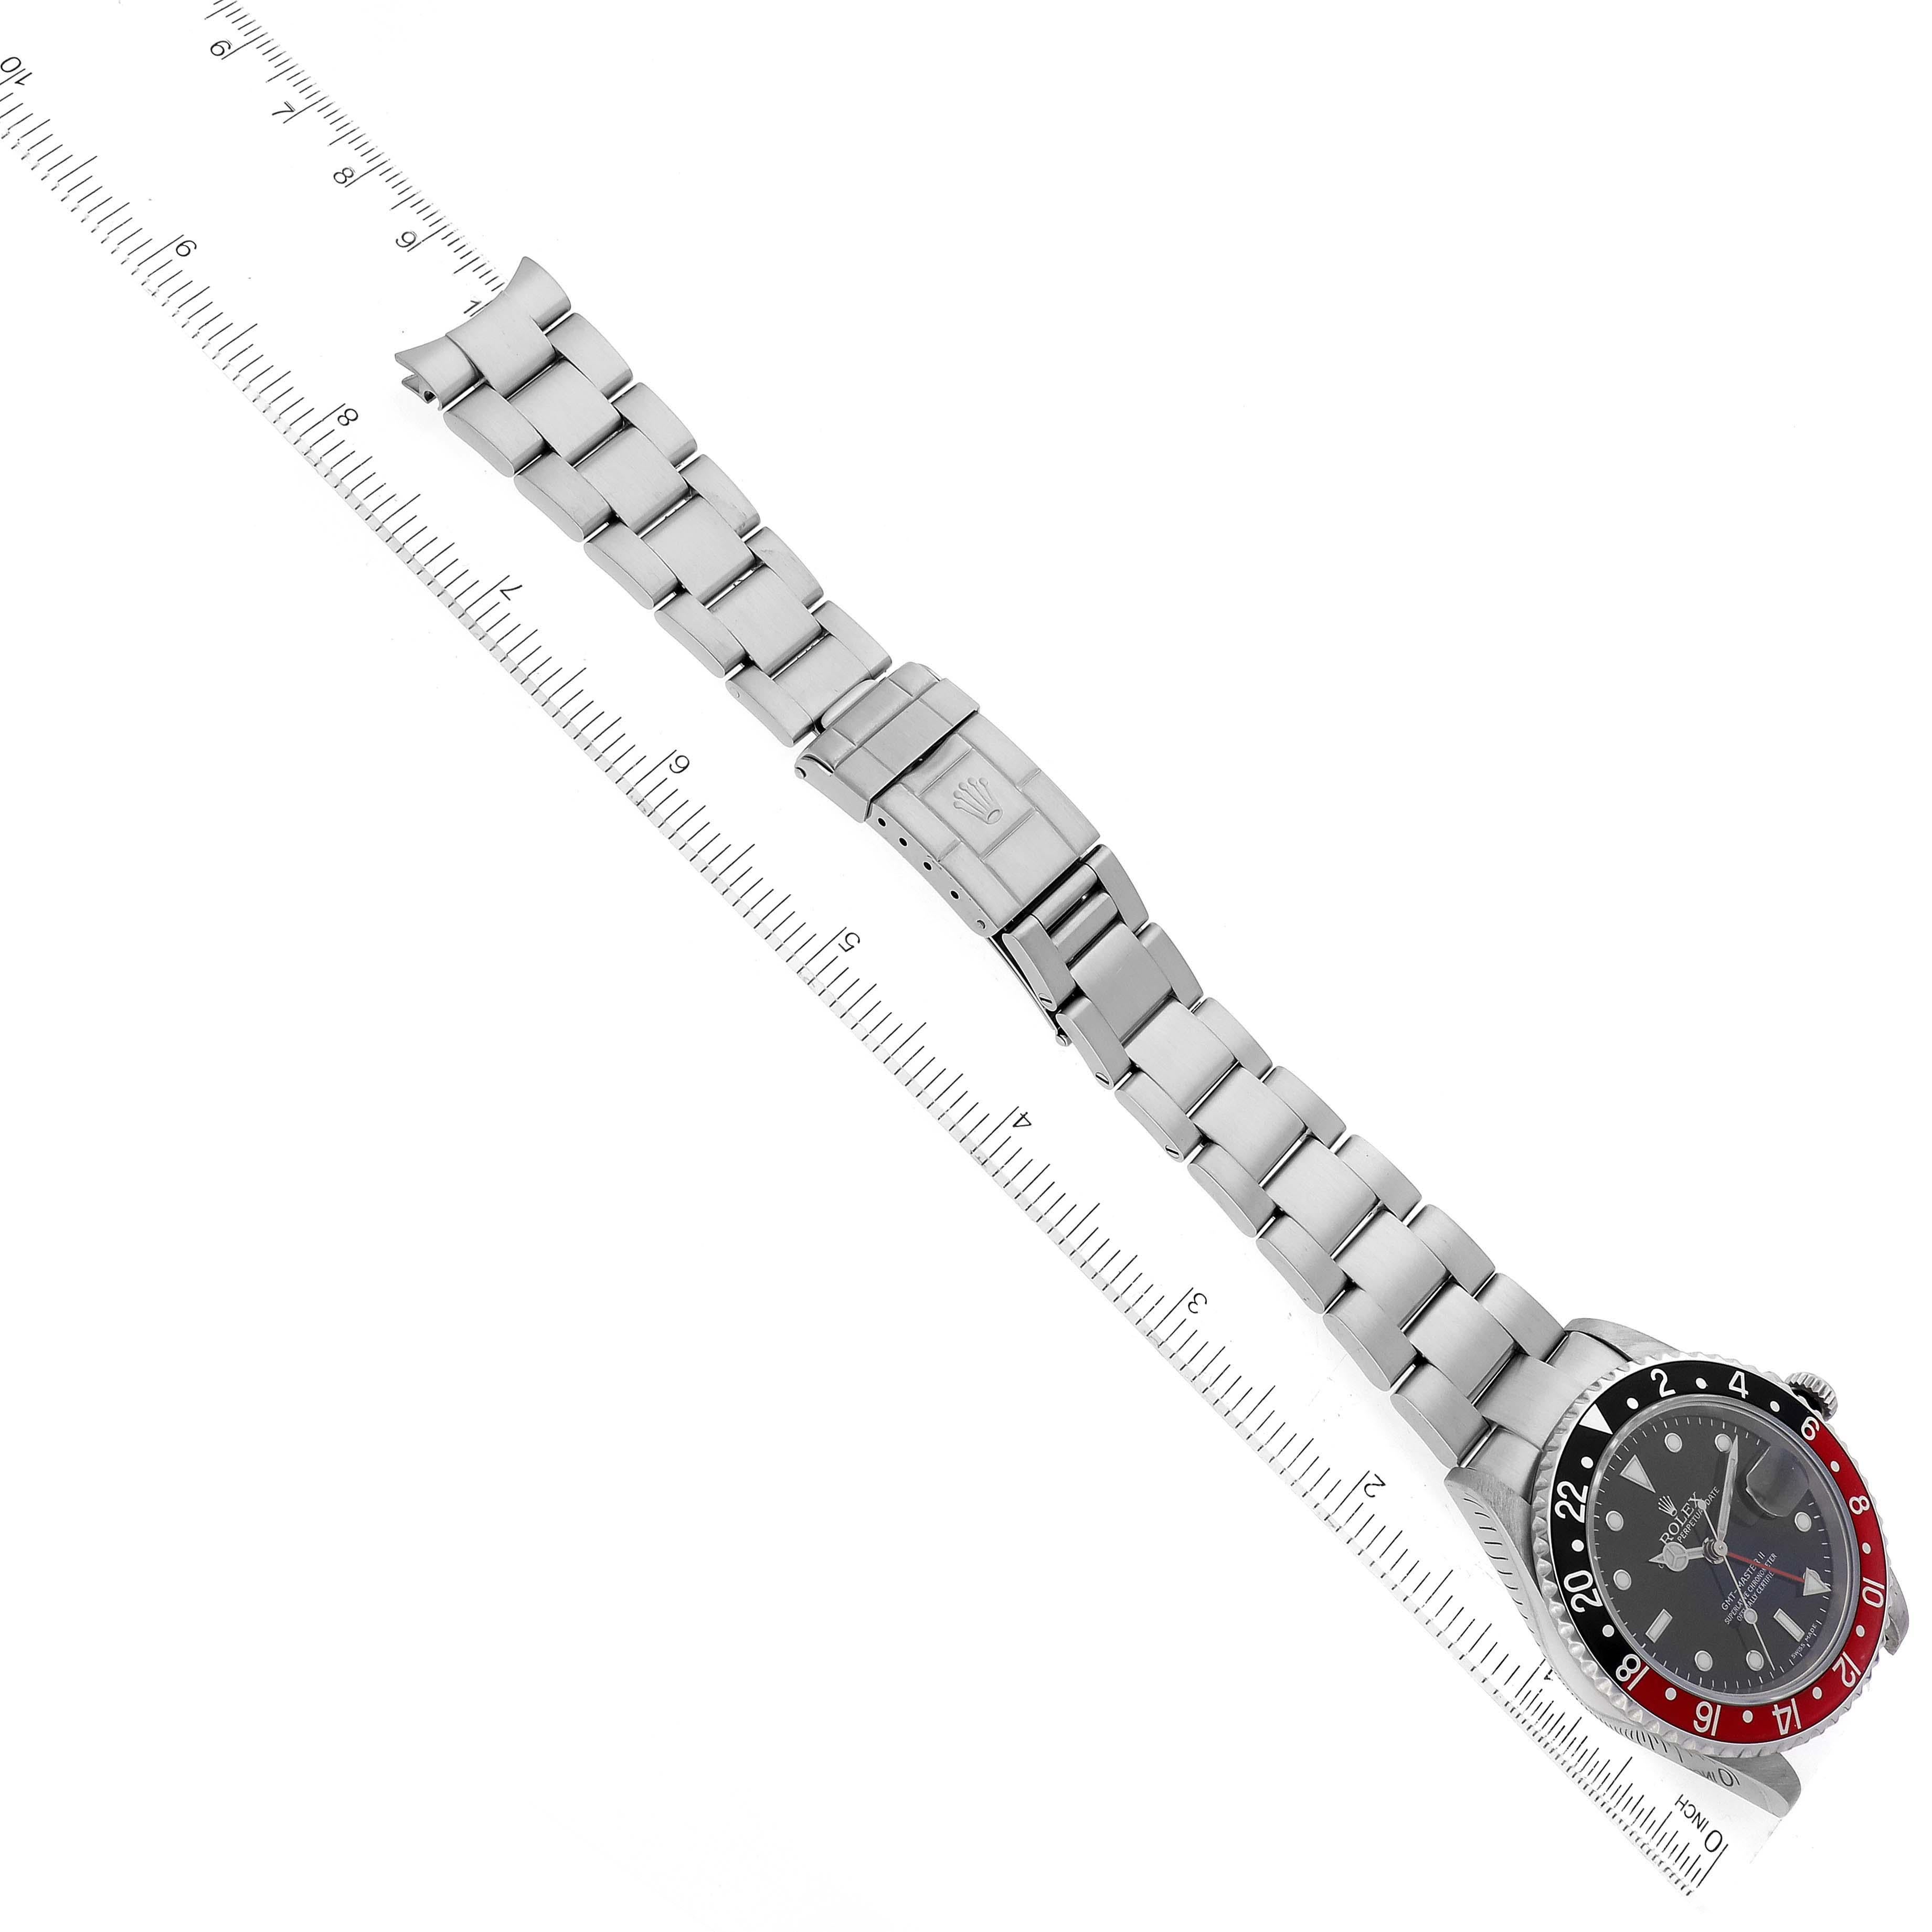 Rolex GMT Master II Black Red Coke Bezel Error Dial Steel Watch 16710 Box Papers 8